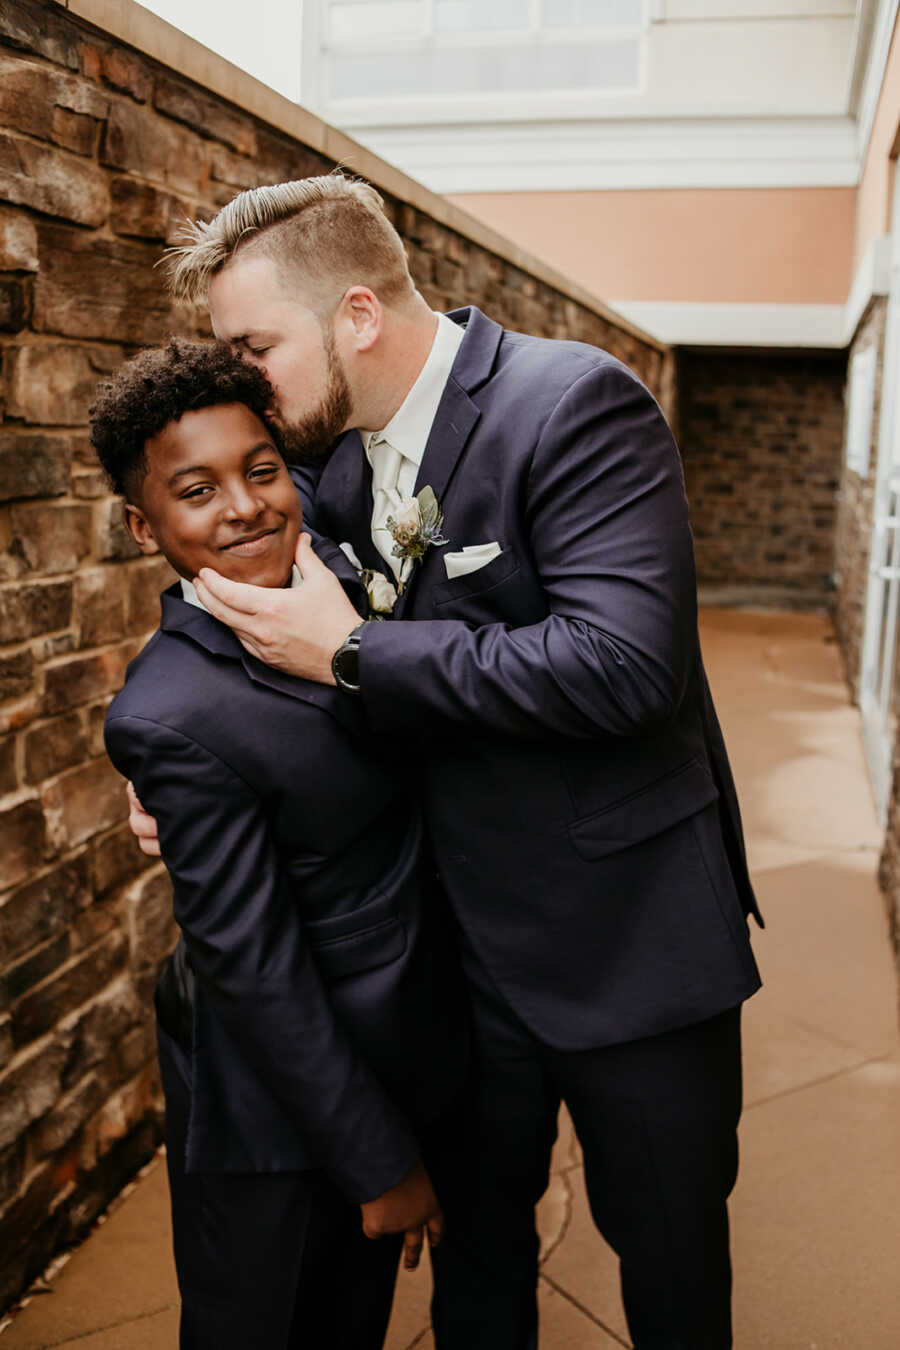 Stepdad kisses his stepson's forehead during wedding photos